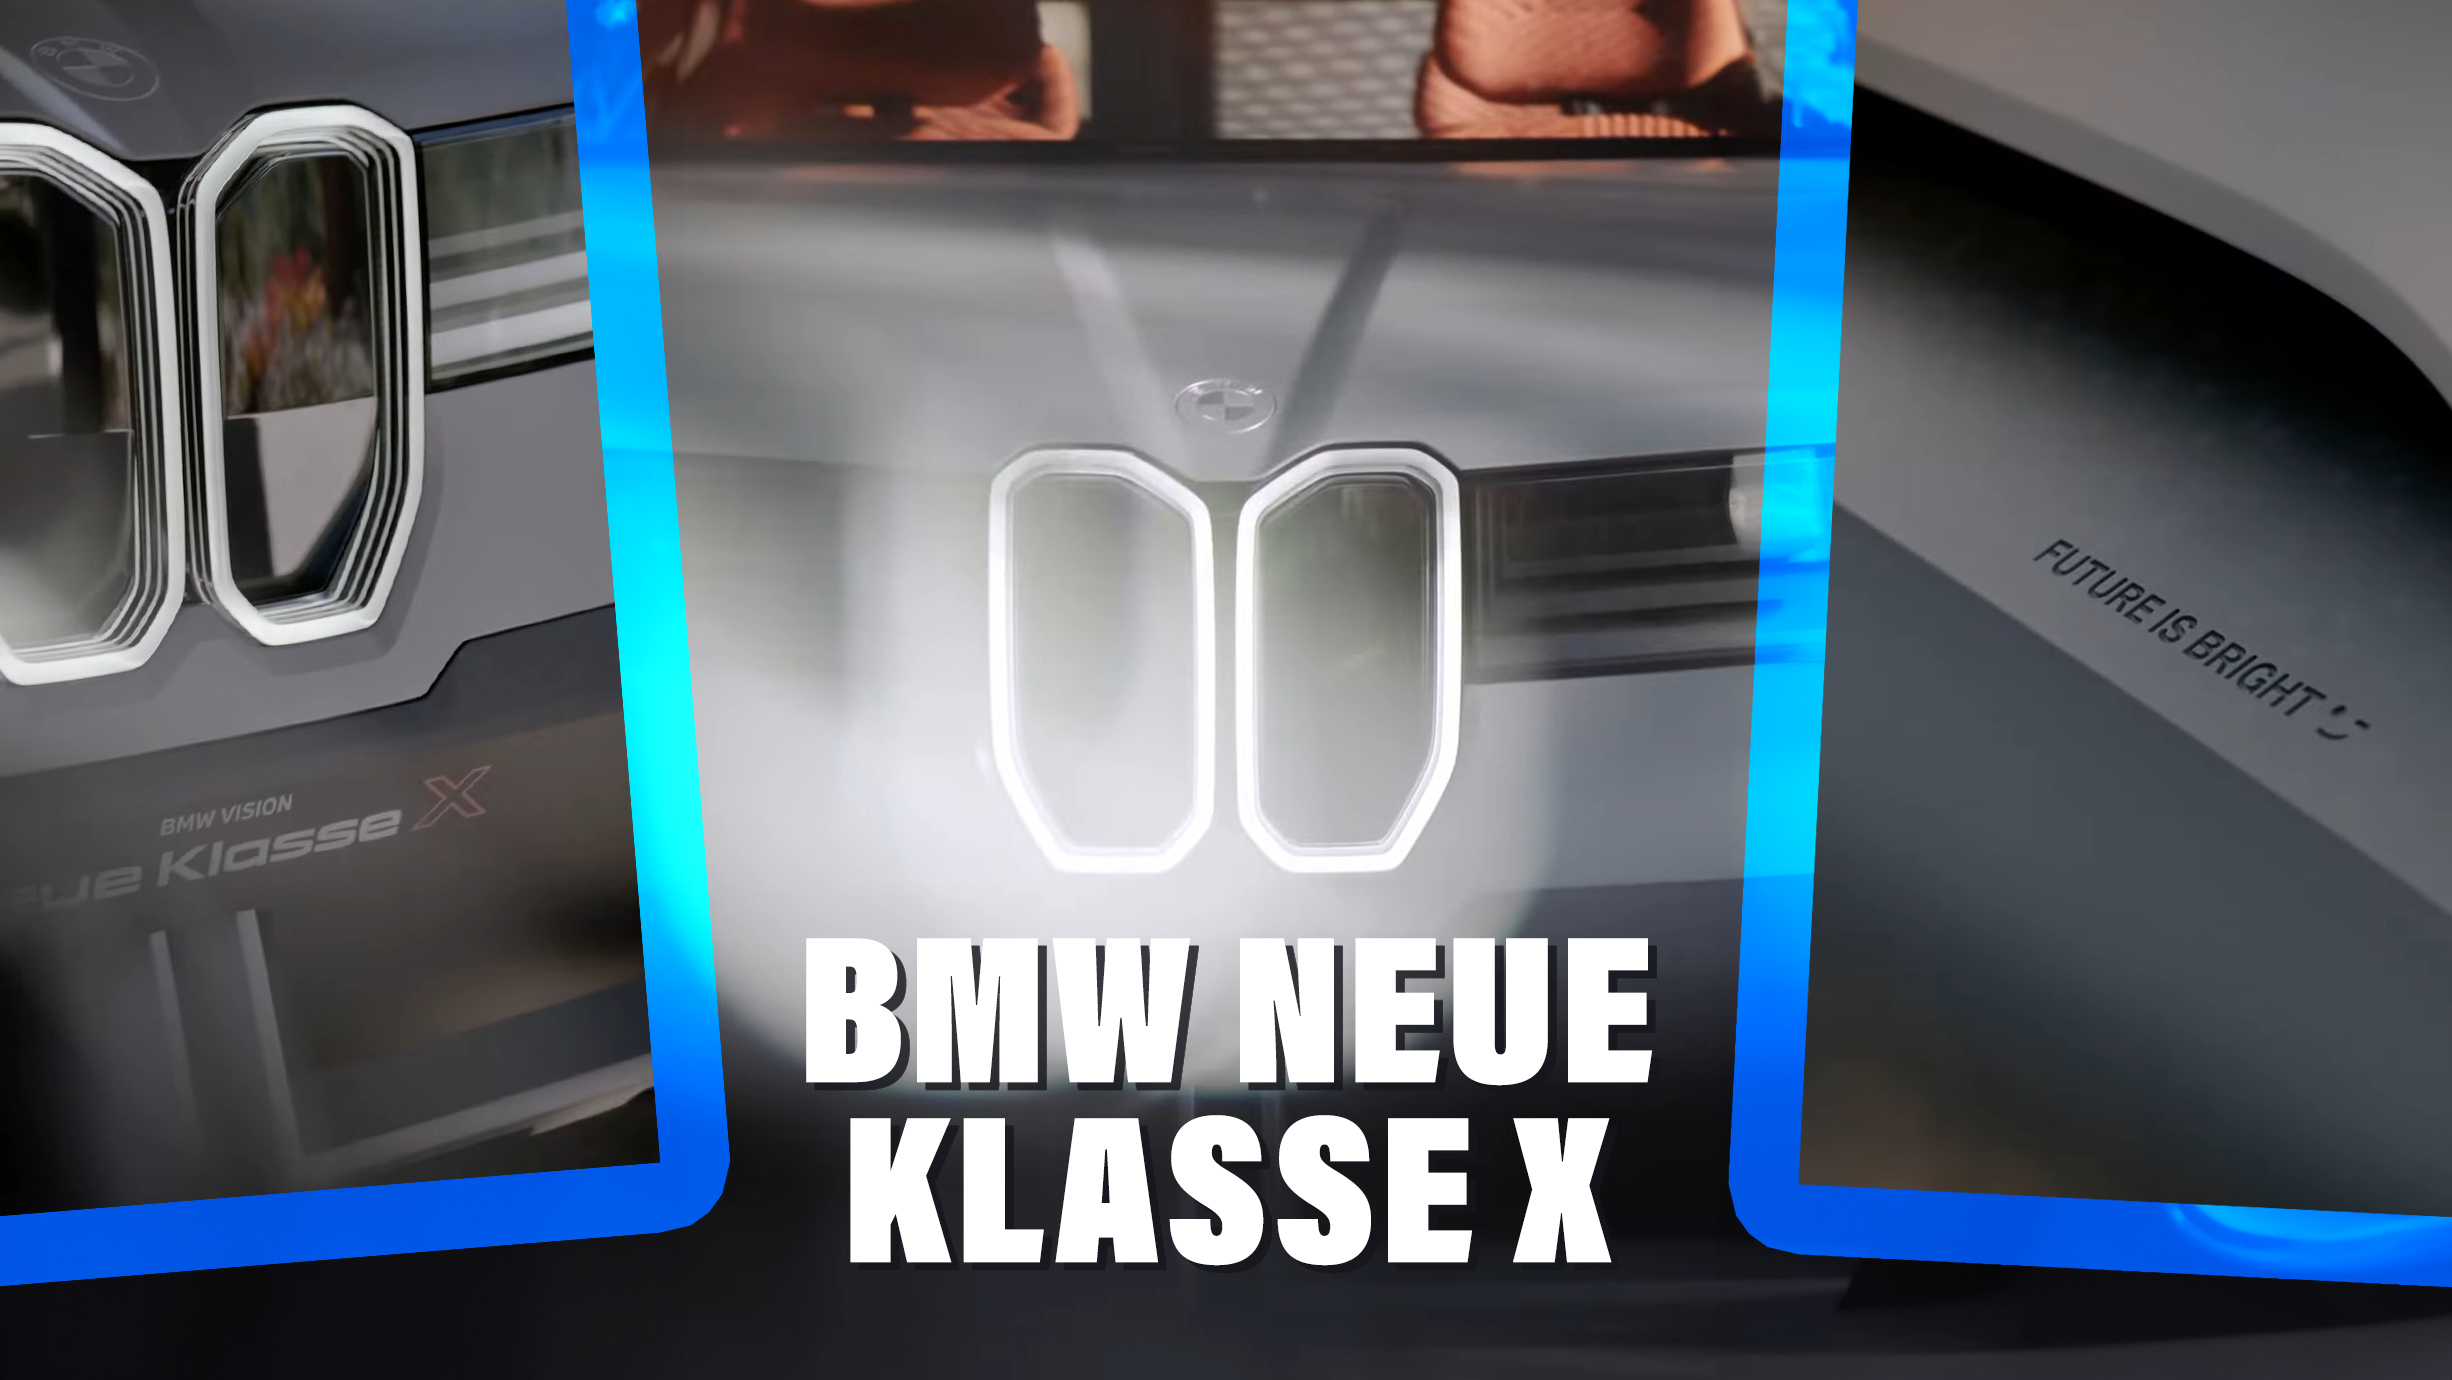 BMW Neue Klasse X Marks Return To Iconic Thin Kidney Grille